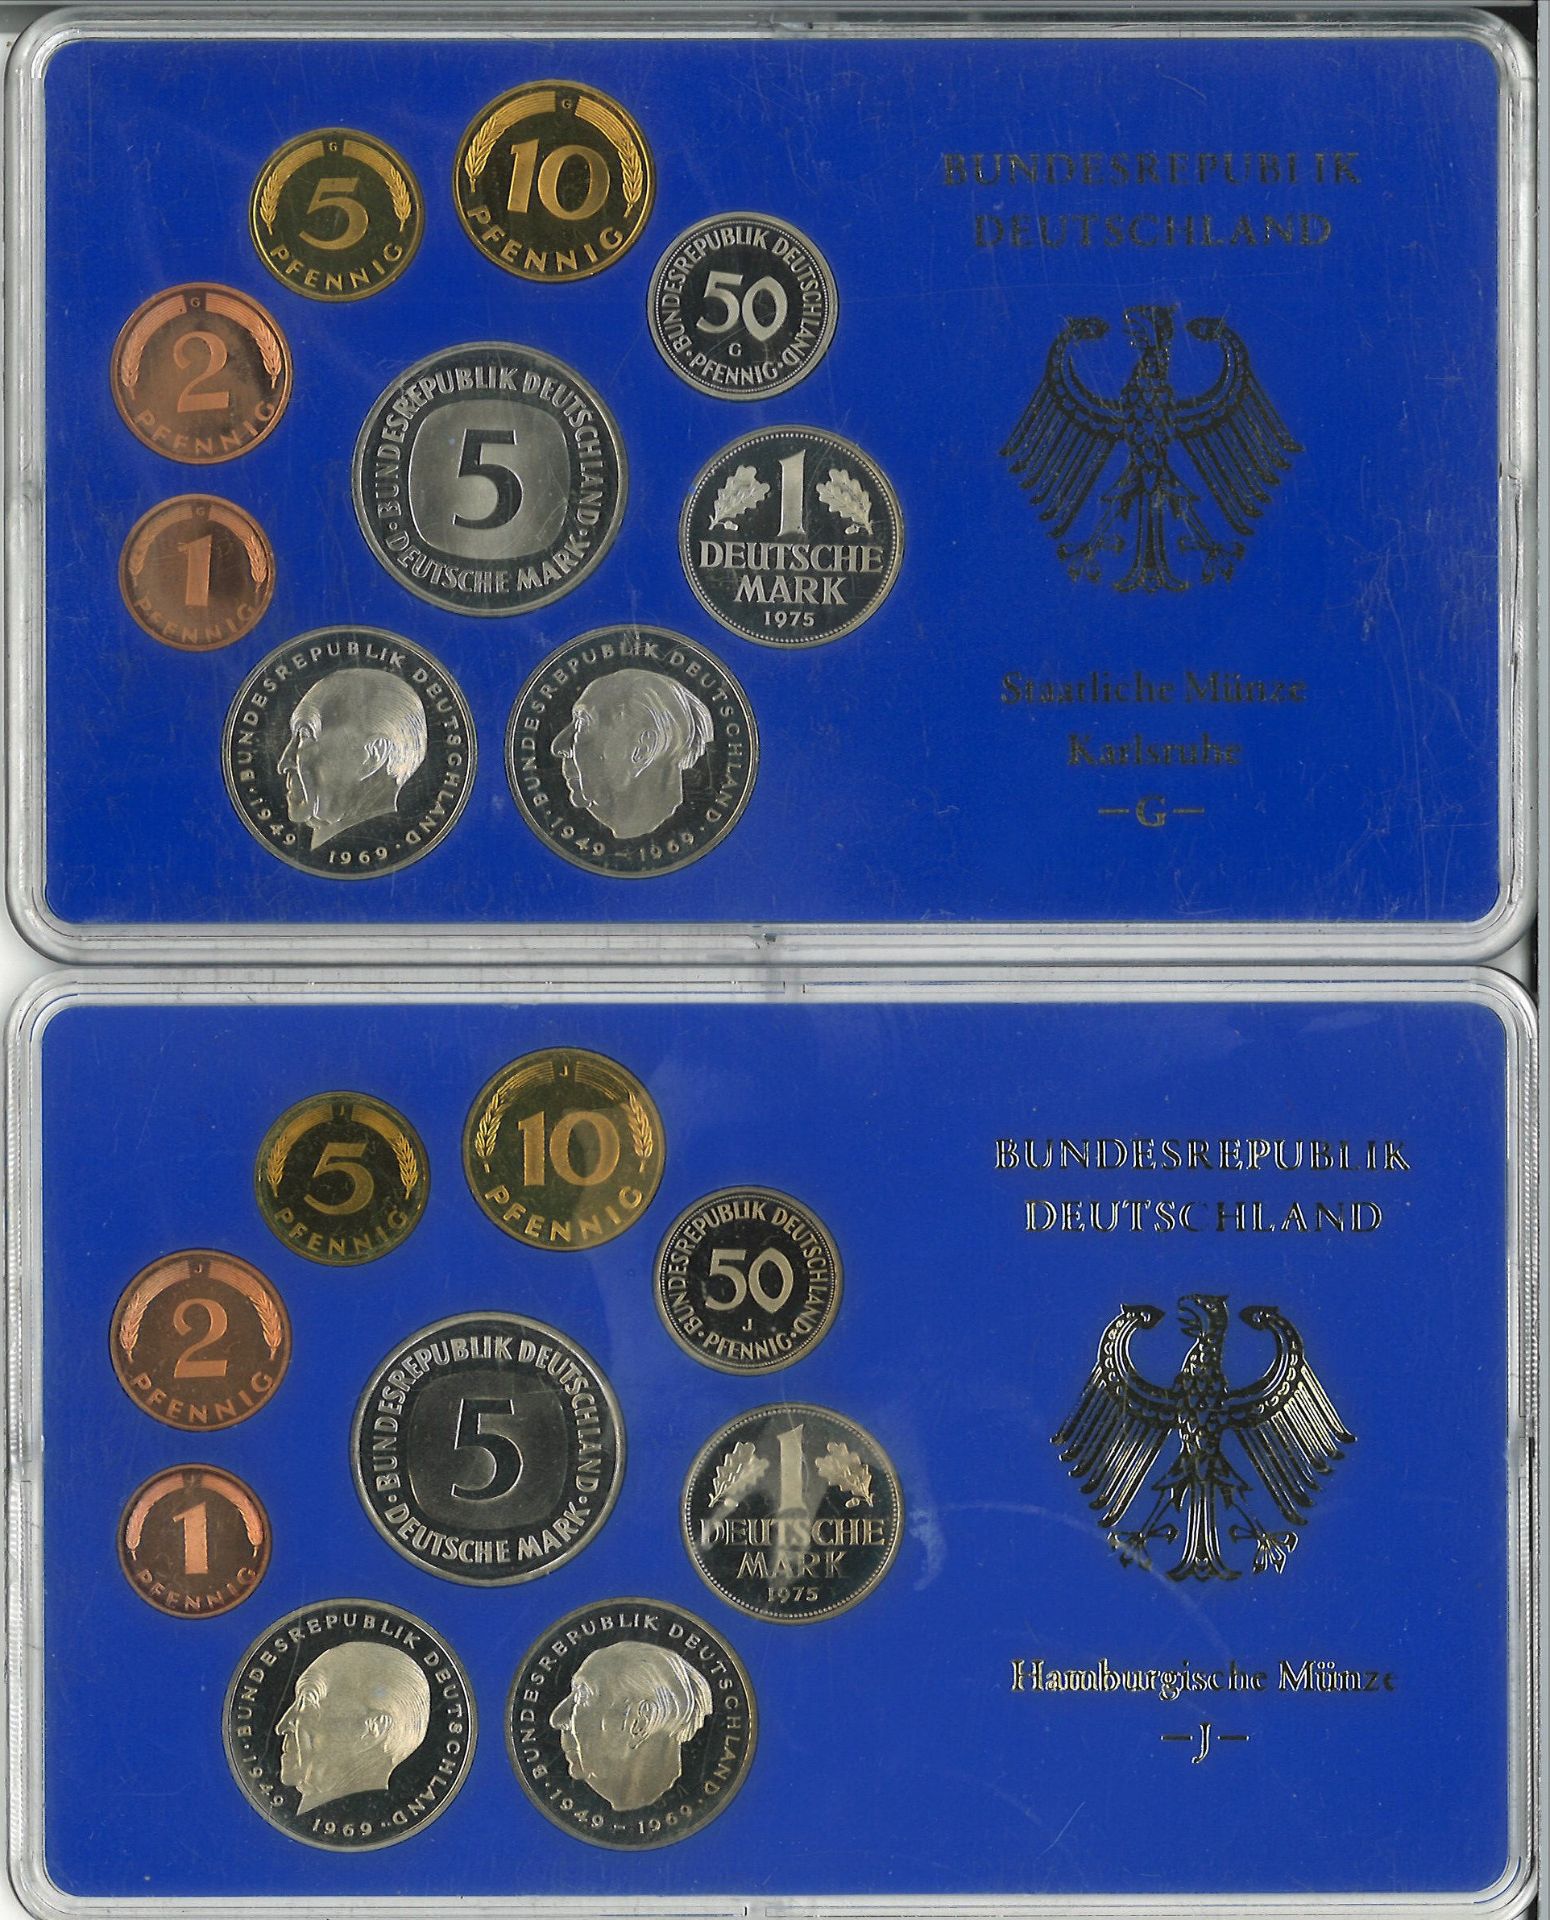 BRD Münzsets Jahrgang 1975, D, F, G und J. Im Original Blister. - Bild 4 aus 4